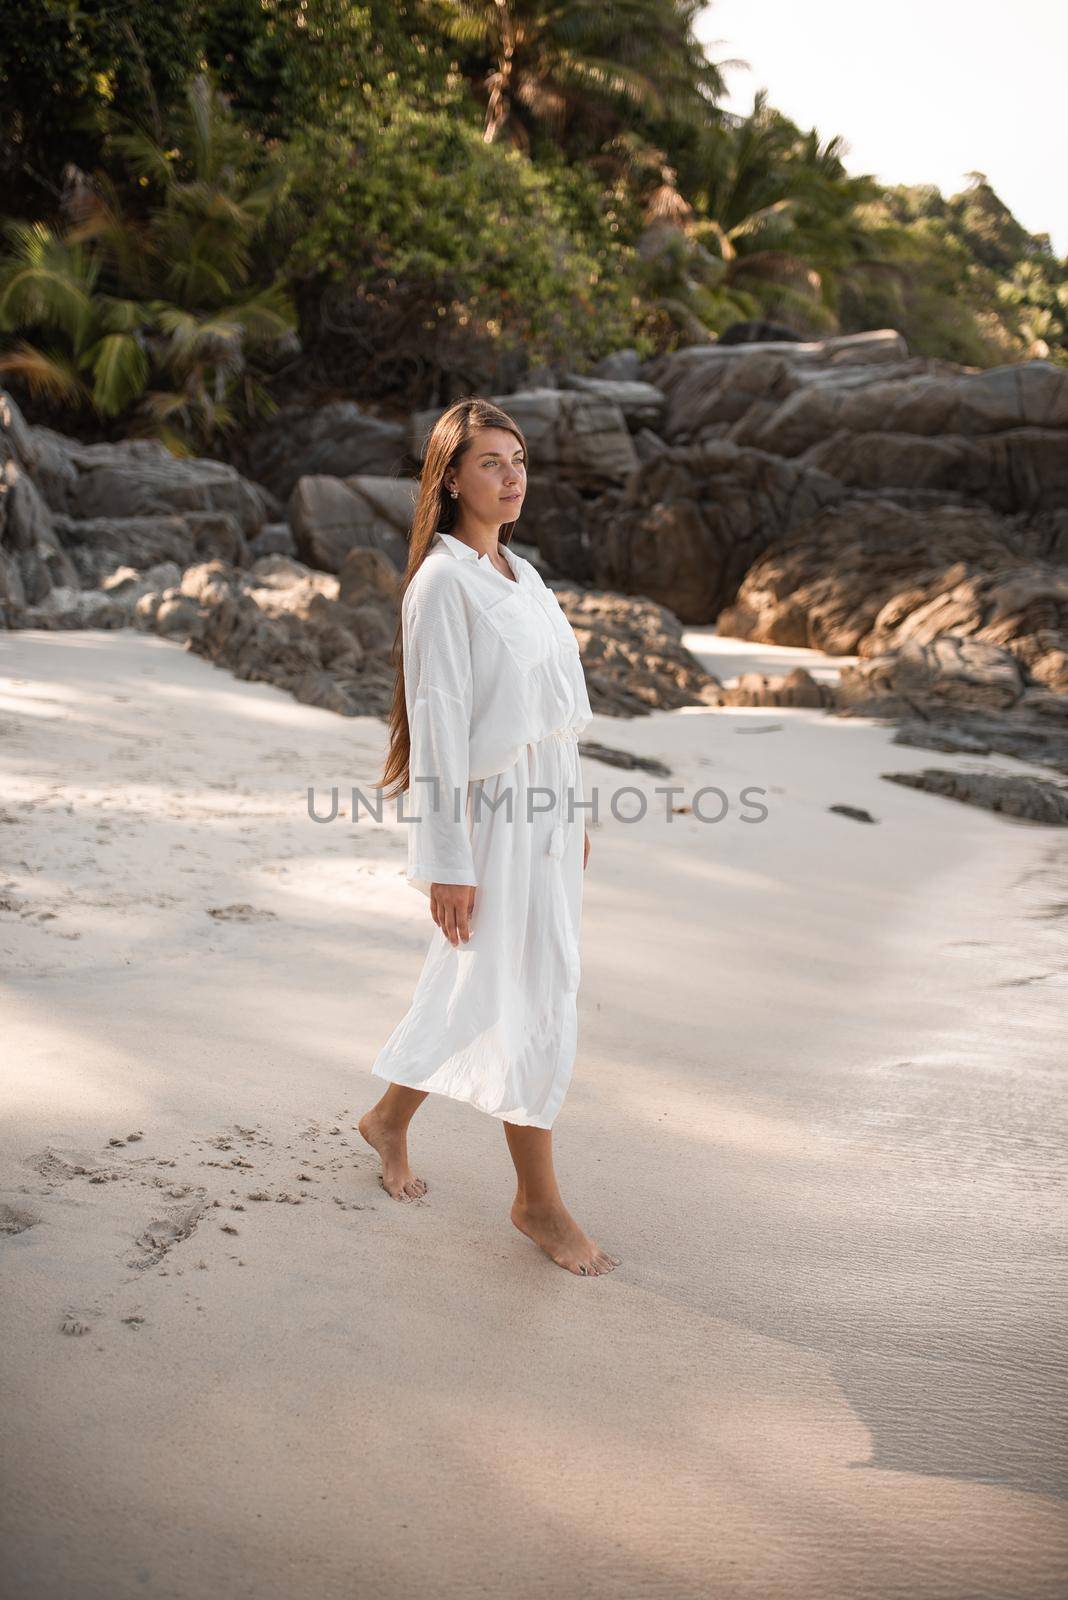 european young tan women have rest and run on white sand beach. long black chestnut hair . white cotton clothes. boho style dress.Thailand. Aquamarine crystal sea